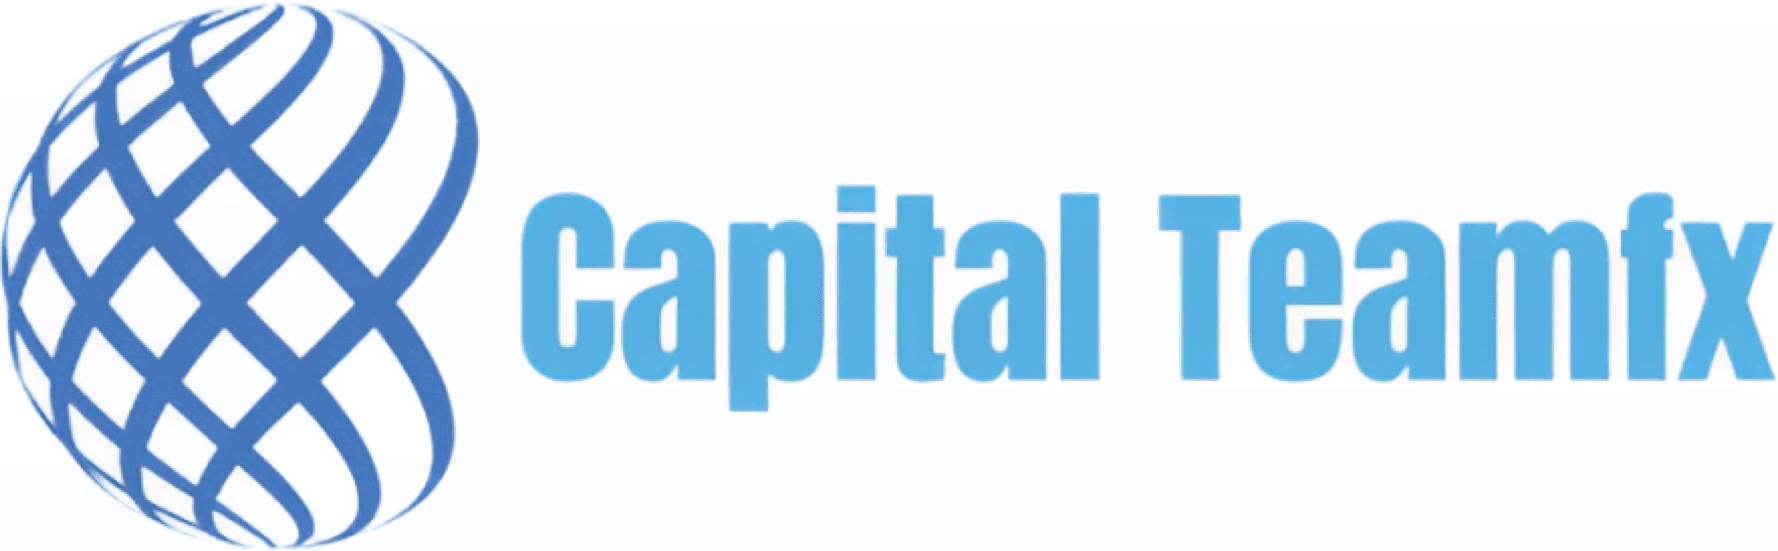 Capital Teamfx